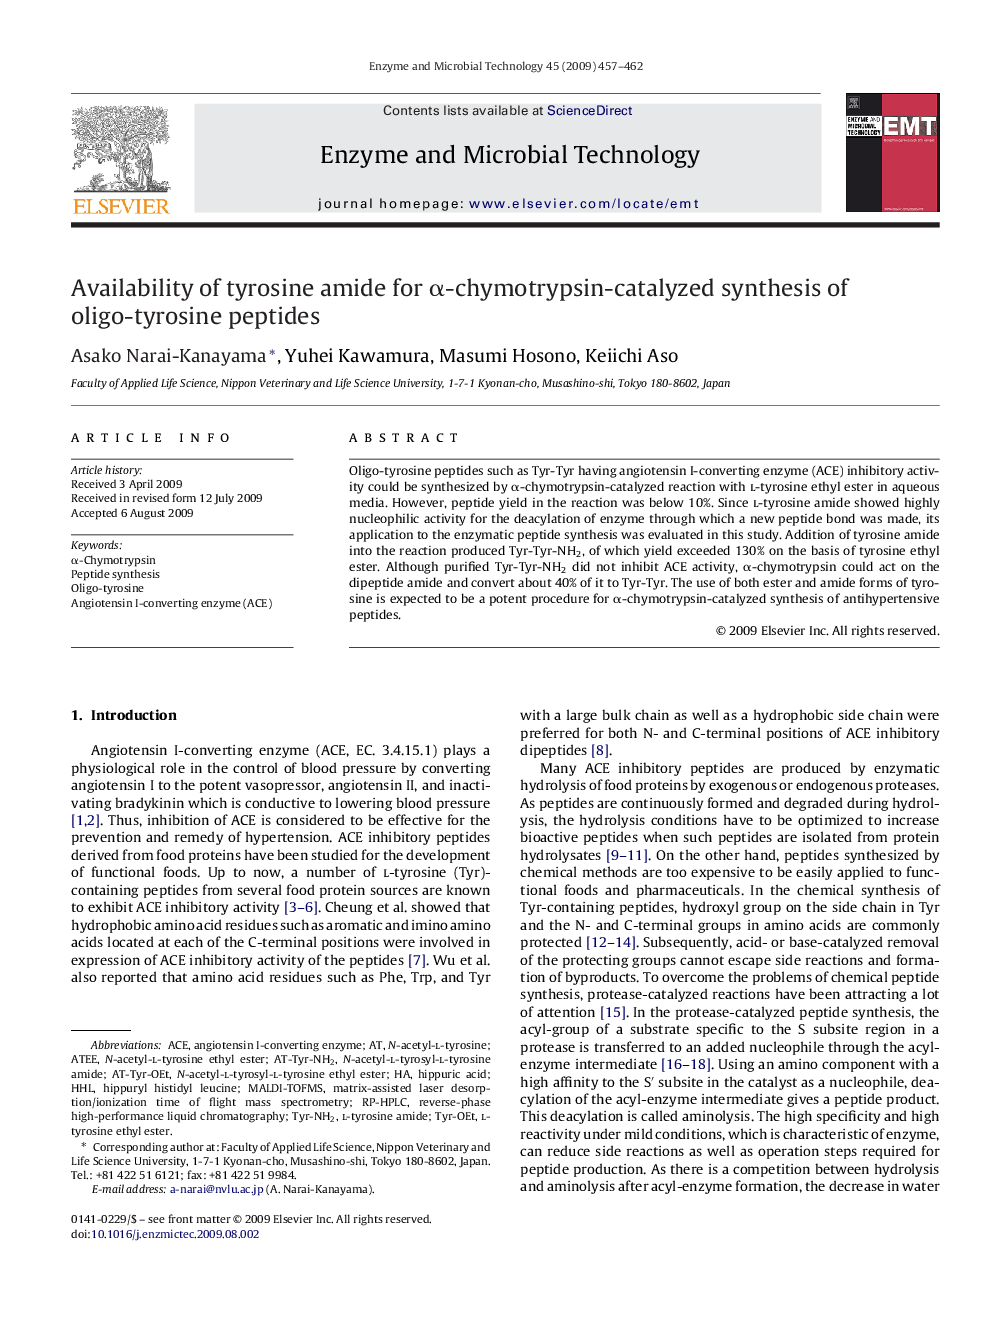 Availability of tyrosine amide for α-chymotrypsin-catalyzed synthesis of oligo-tyrosine peptides